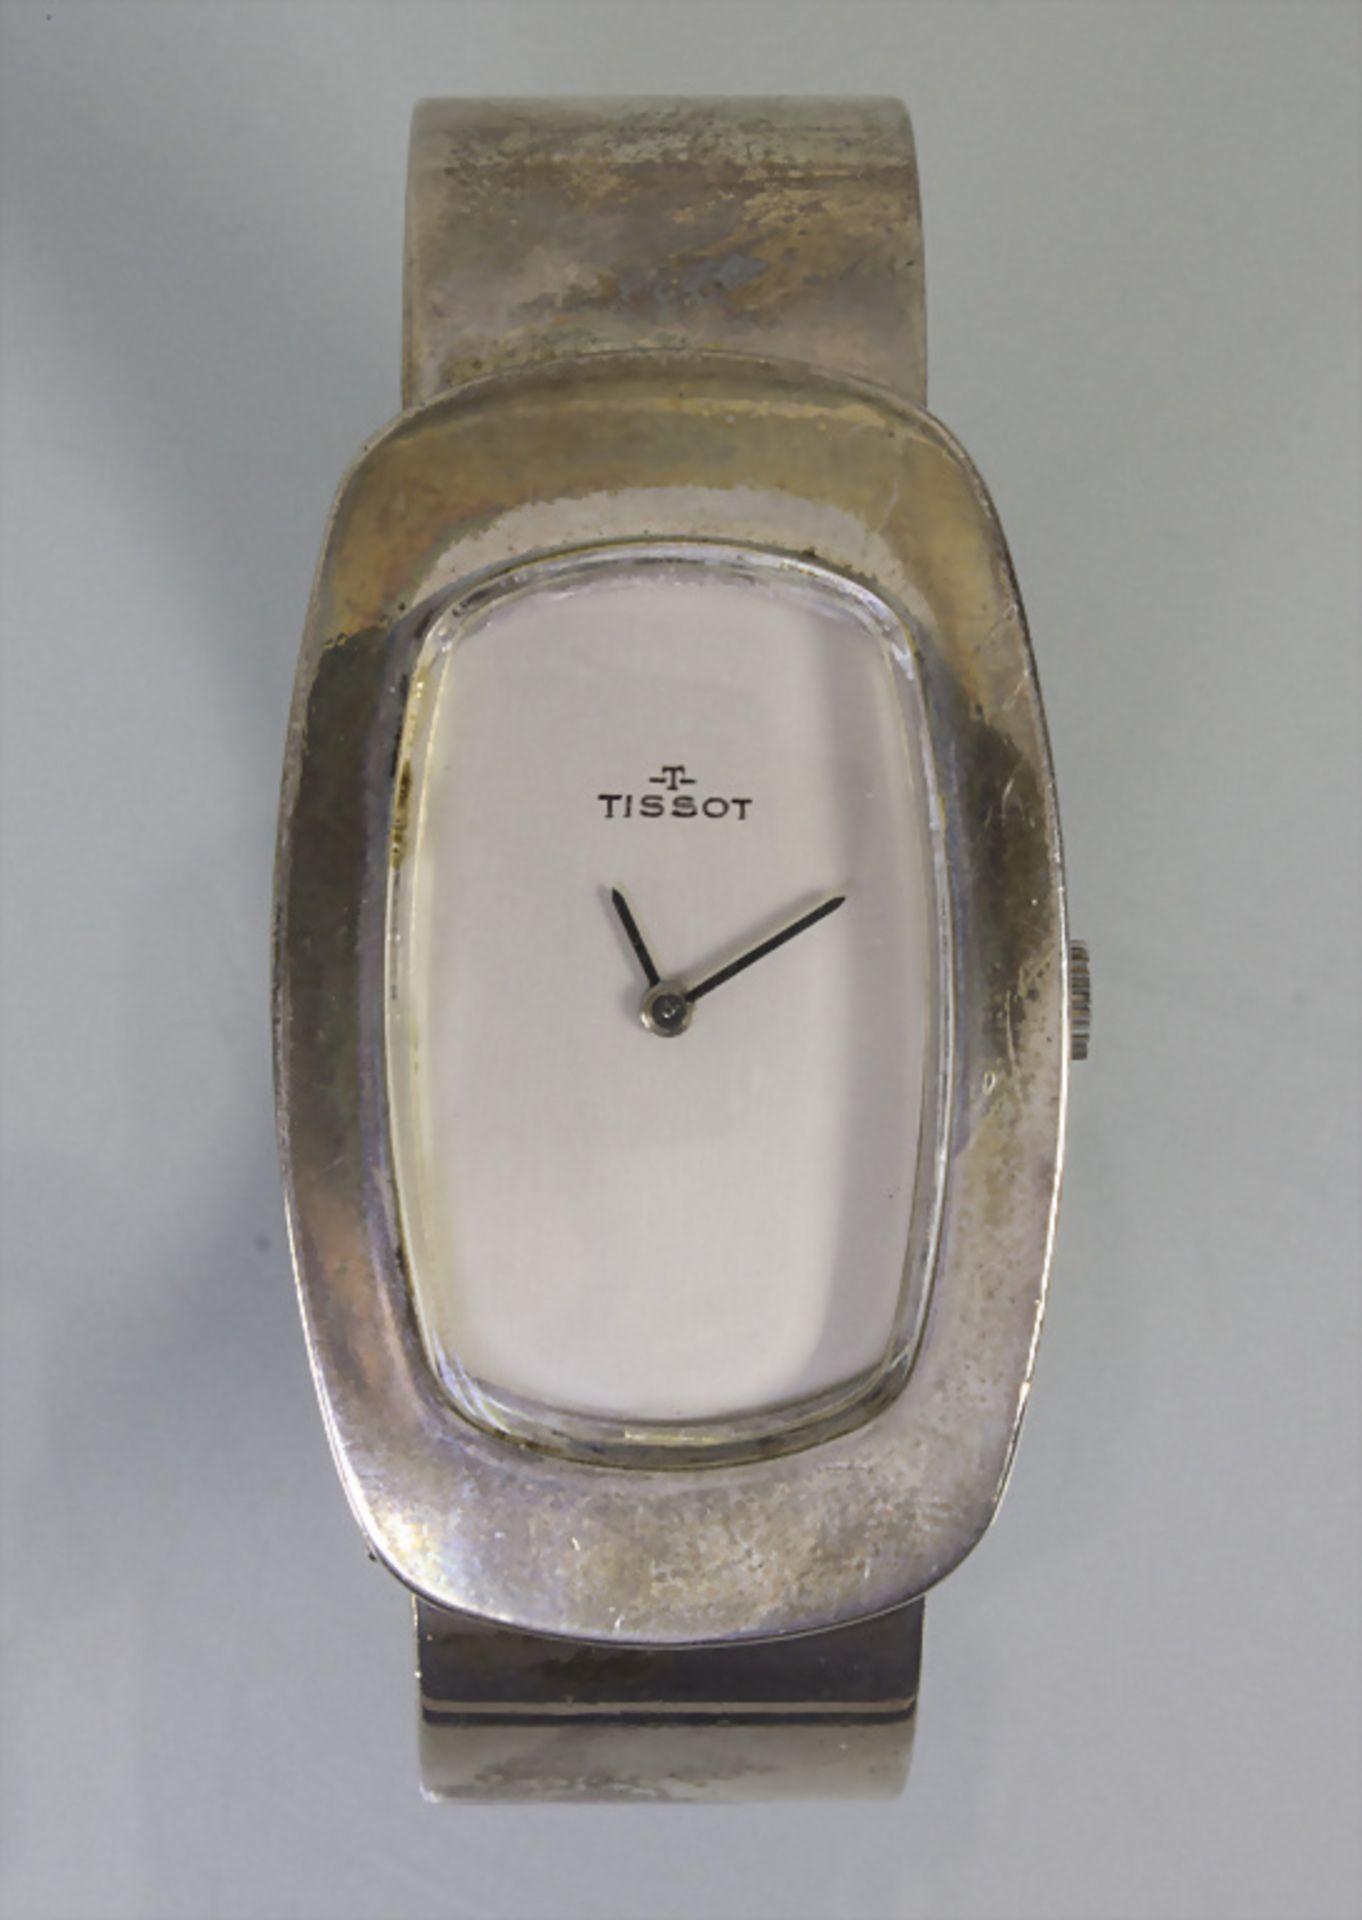 Damenarmbanduhr / A ladies silver watch, Tissot, Schweiz, 1970er